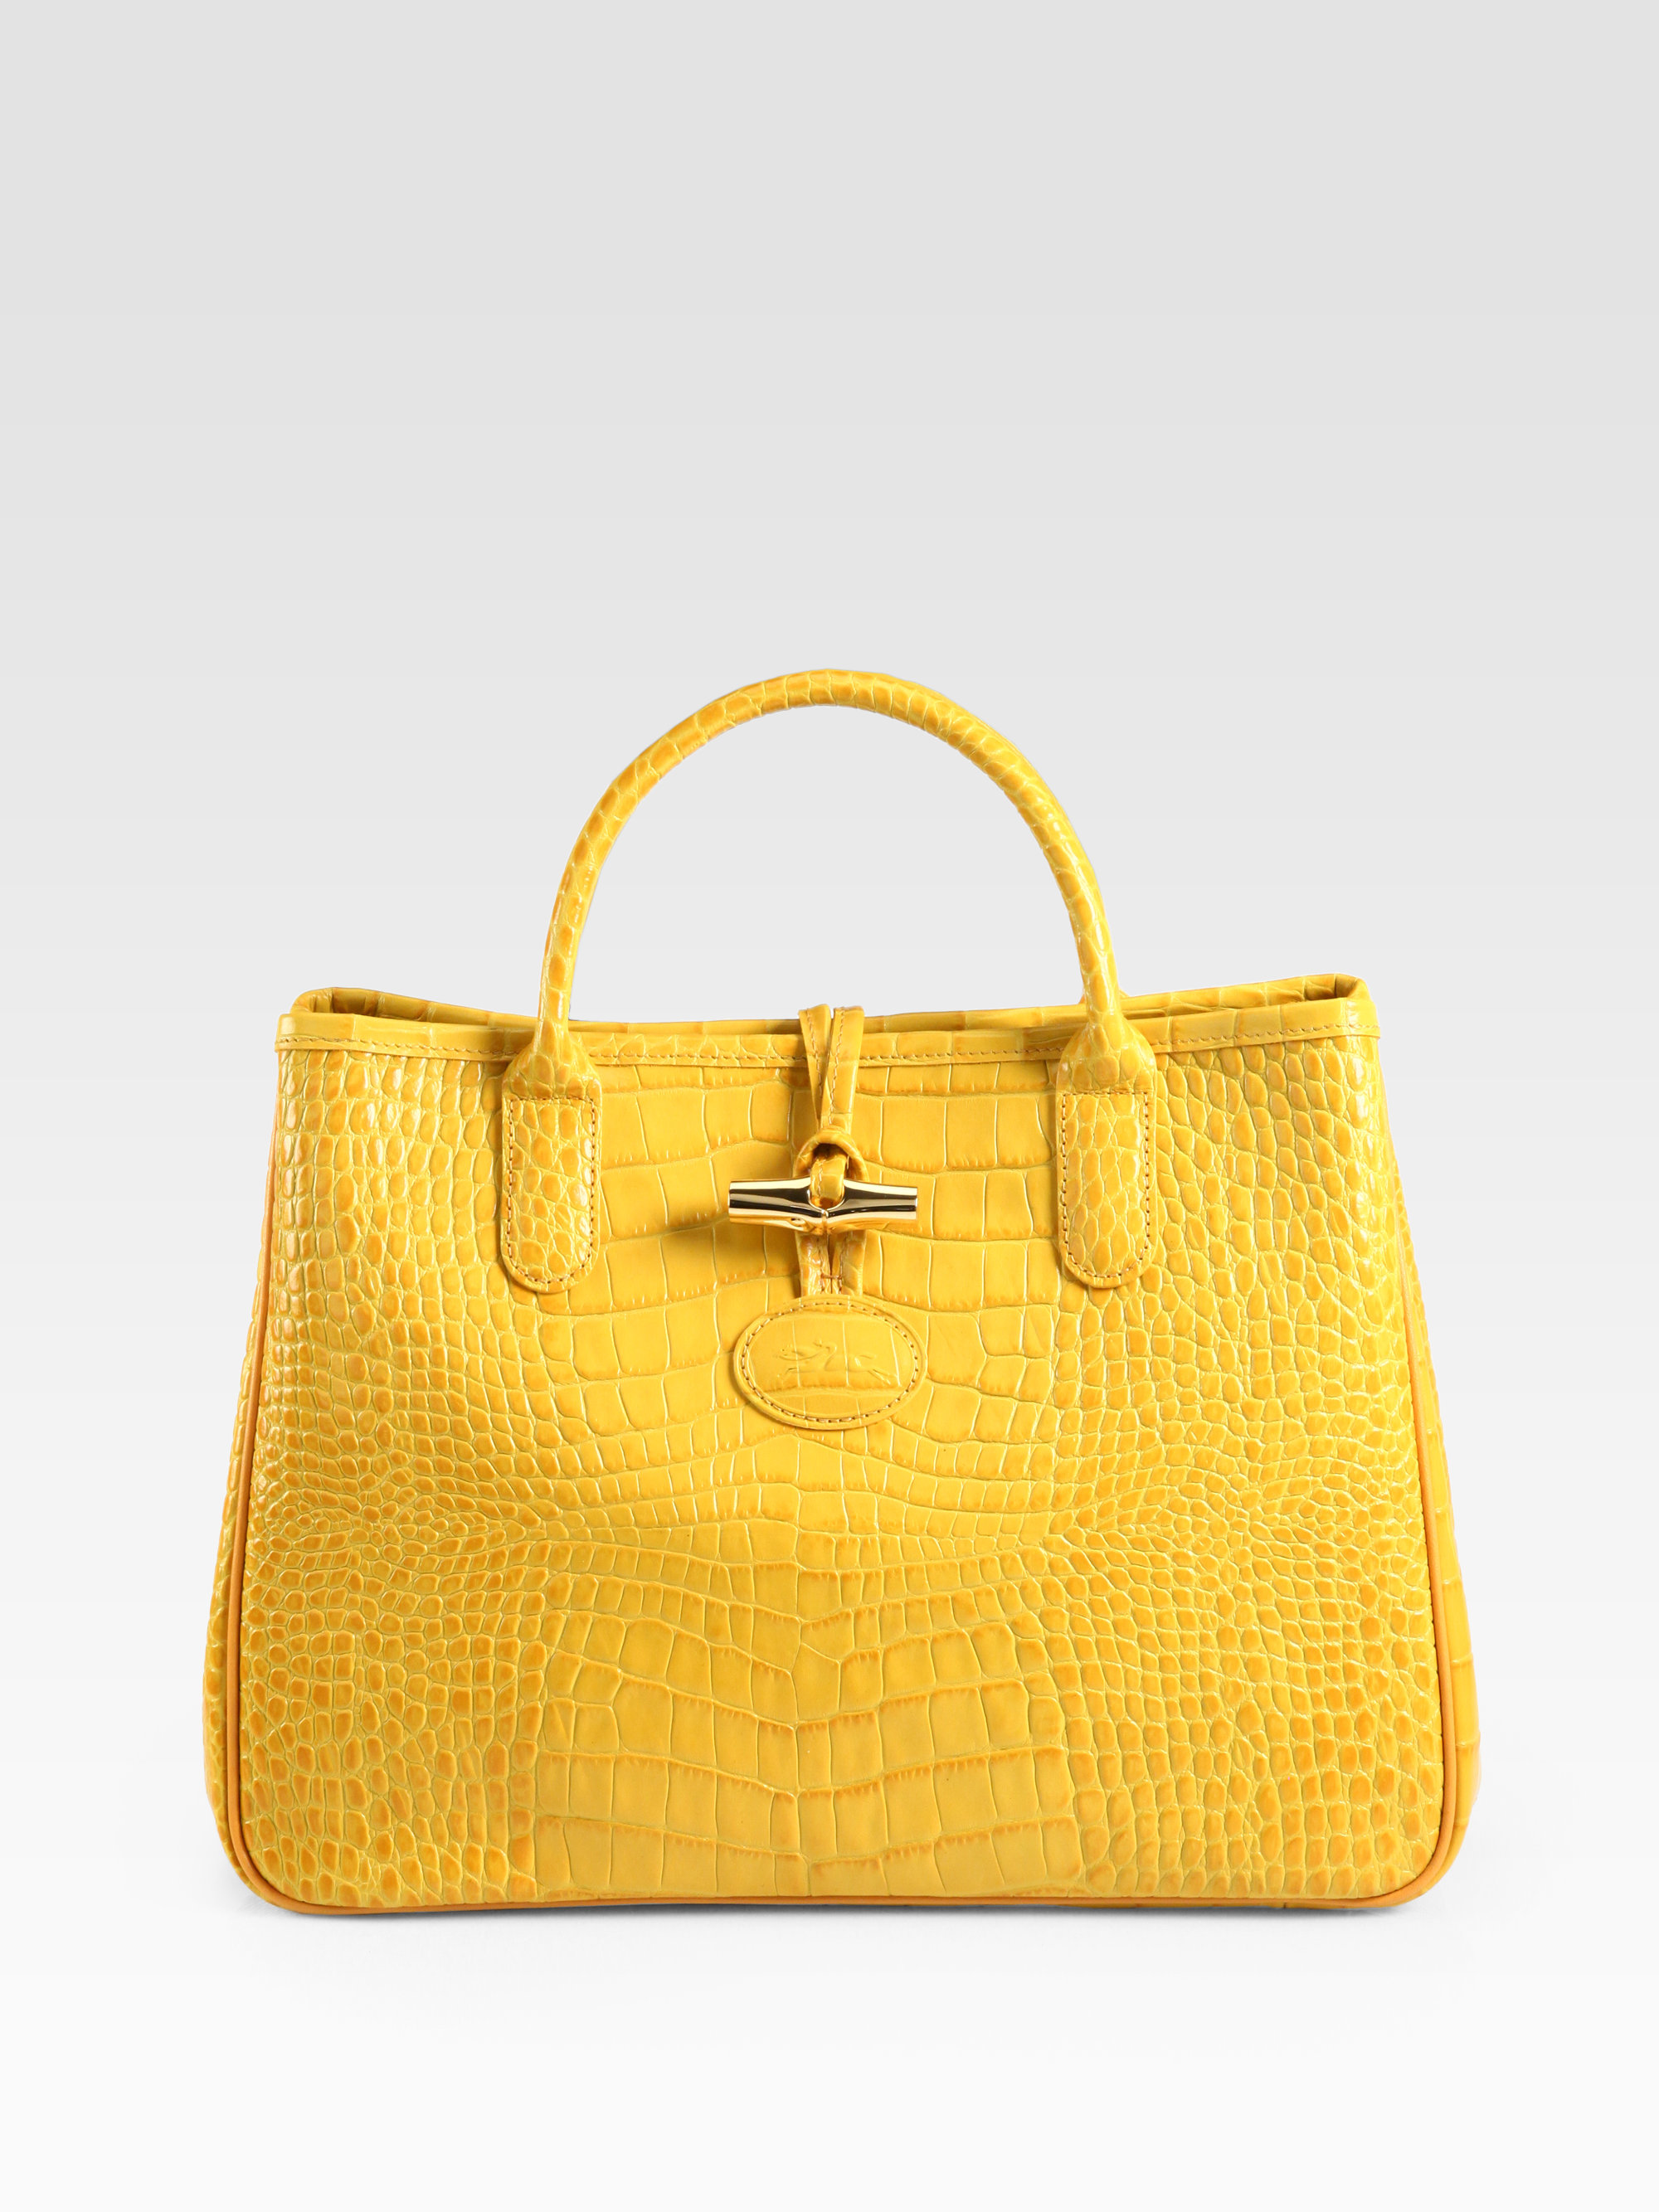 Lyst - Longchamp Crocodile Embossed Leather Shopper in Yellow